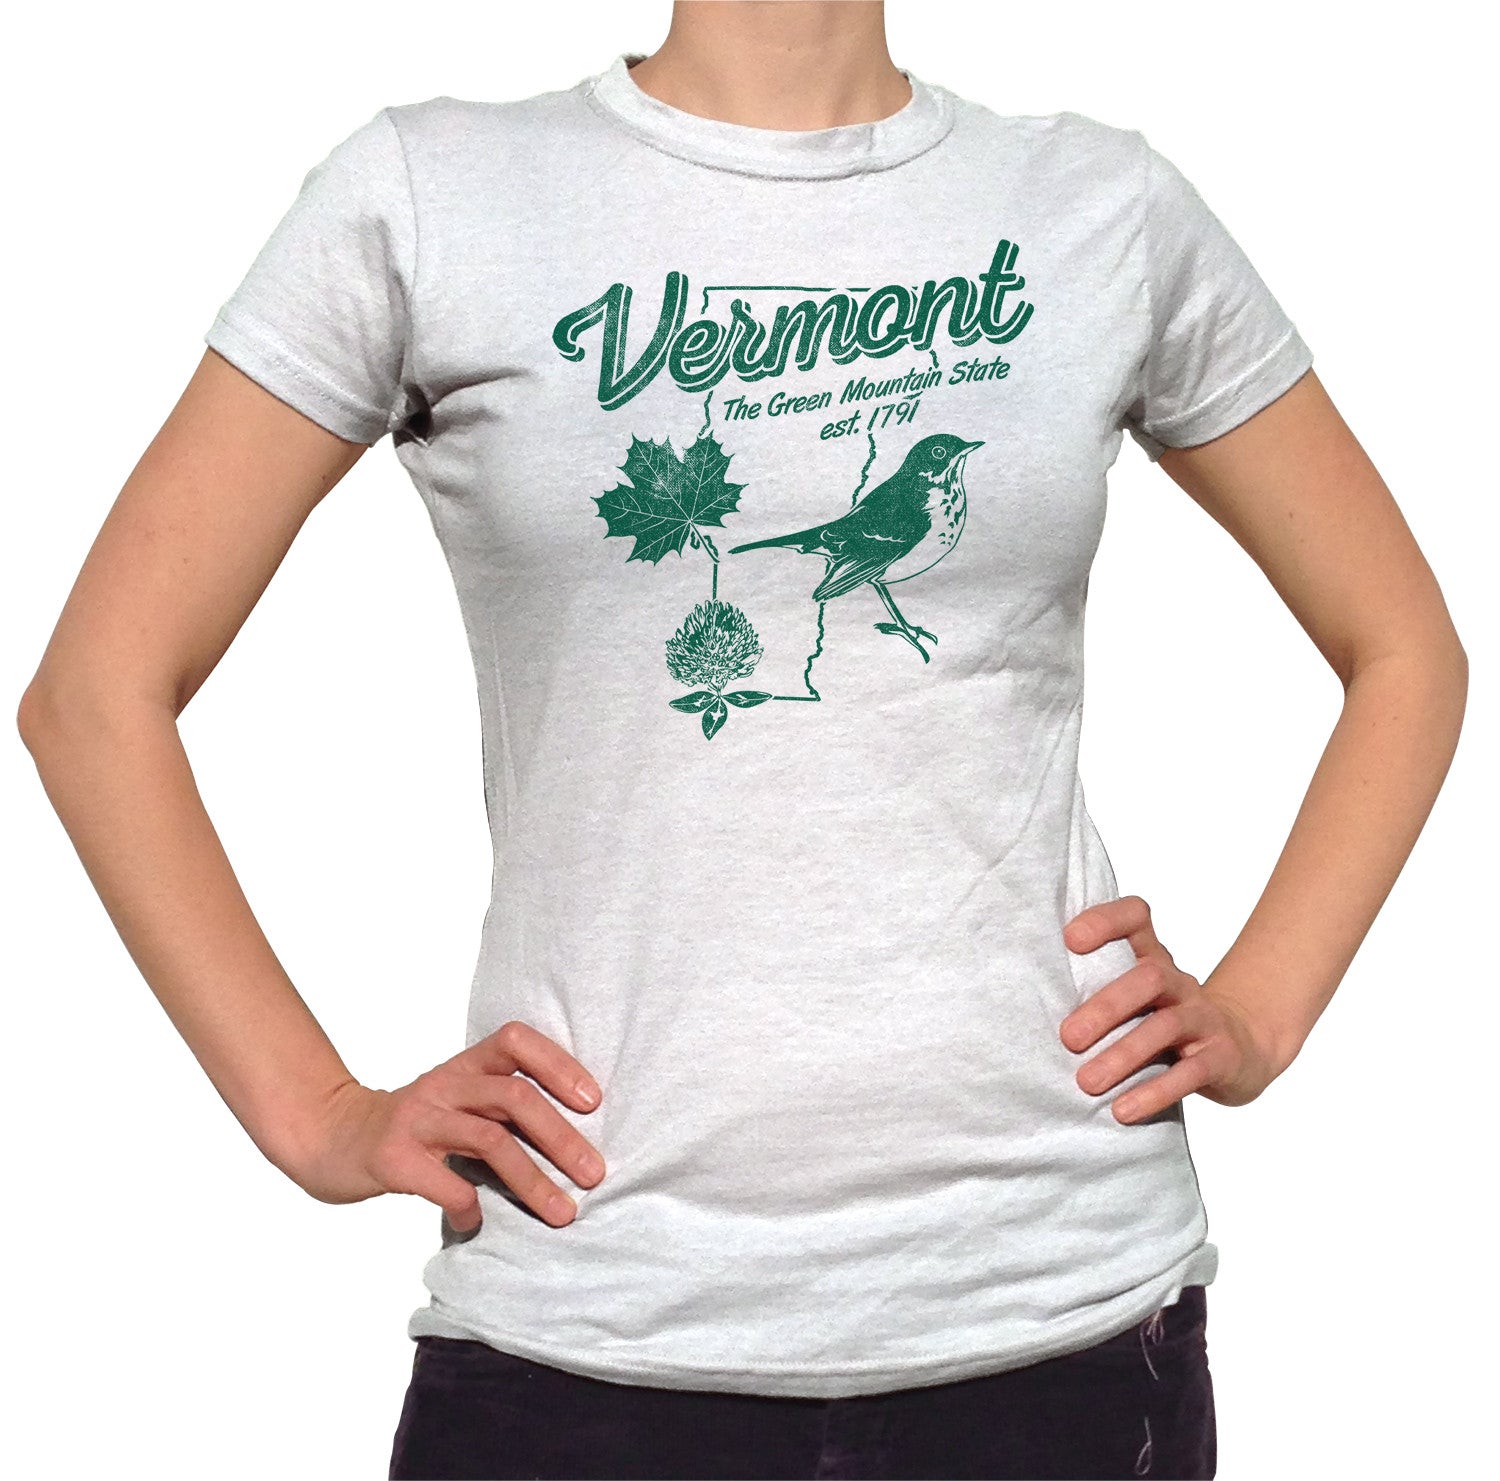 Women's Vintage Vermont T-Shirt